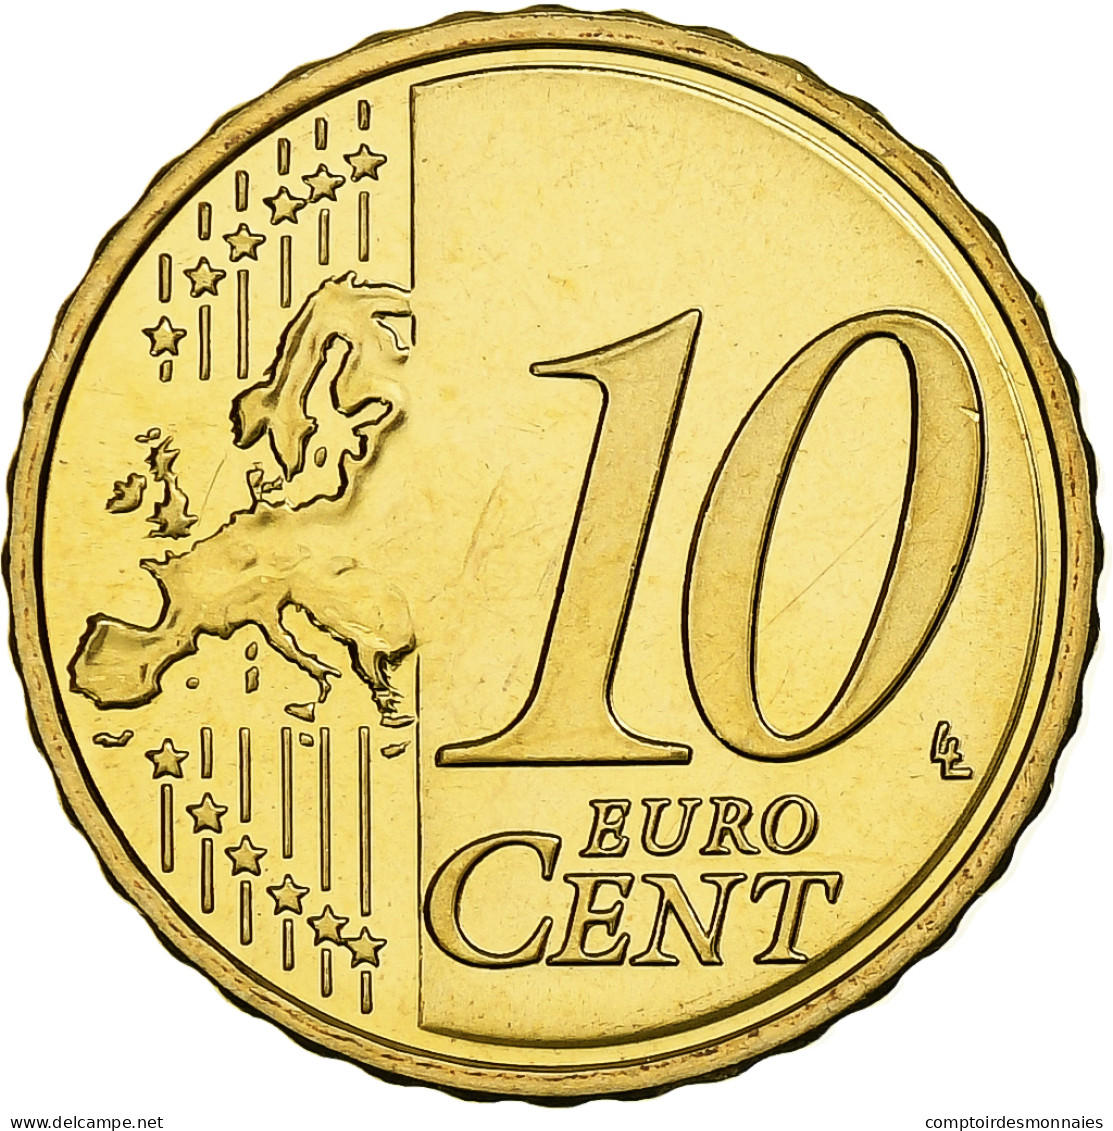 Chypre, 10 Euro Cent, 2009, Laiton, FDC, KM:81 - Cyprus